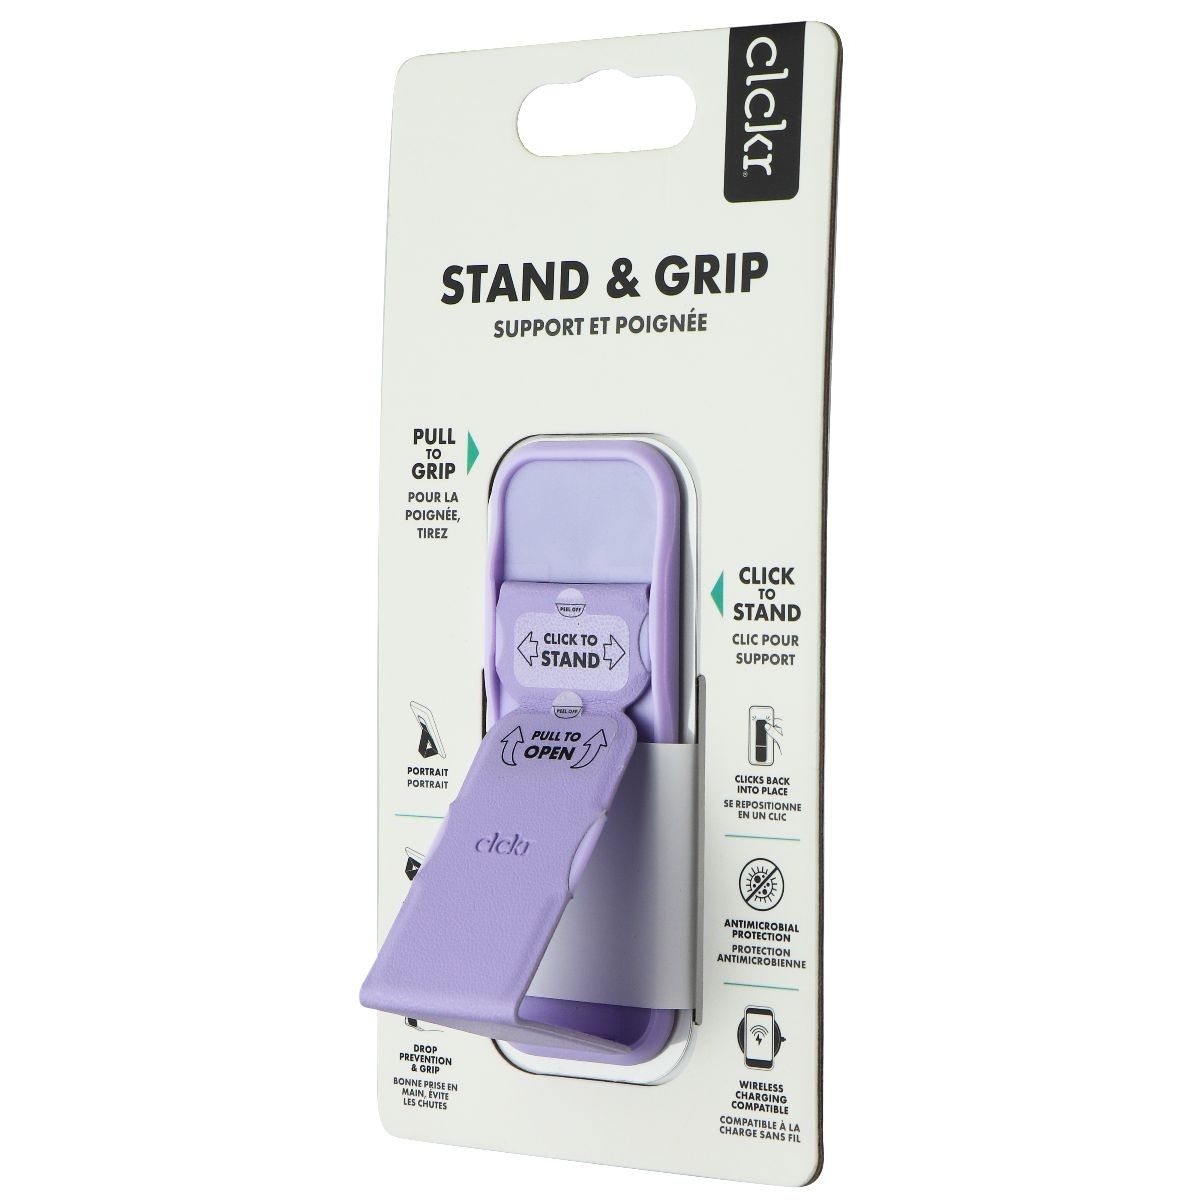 CLCKR Stand & Grip Universal Adhesive Kickstand Grip For Smartphones - Lilac (Refurbished)